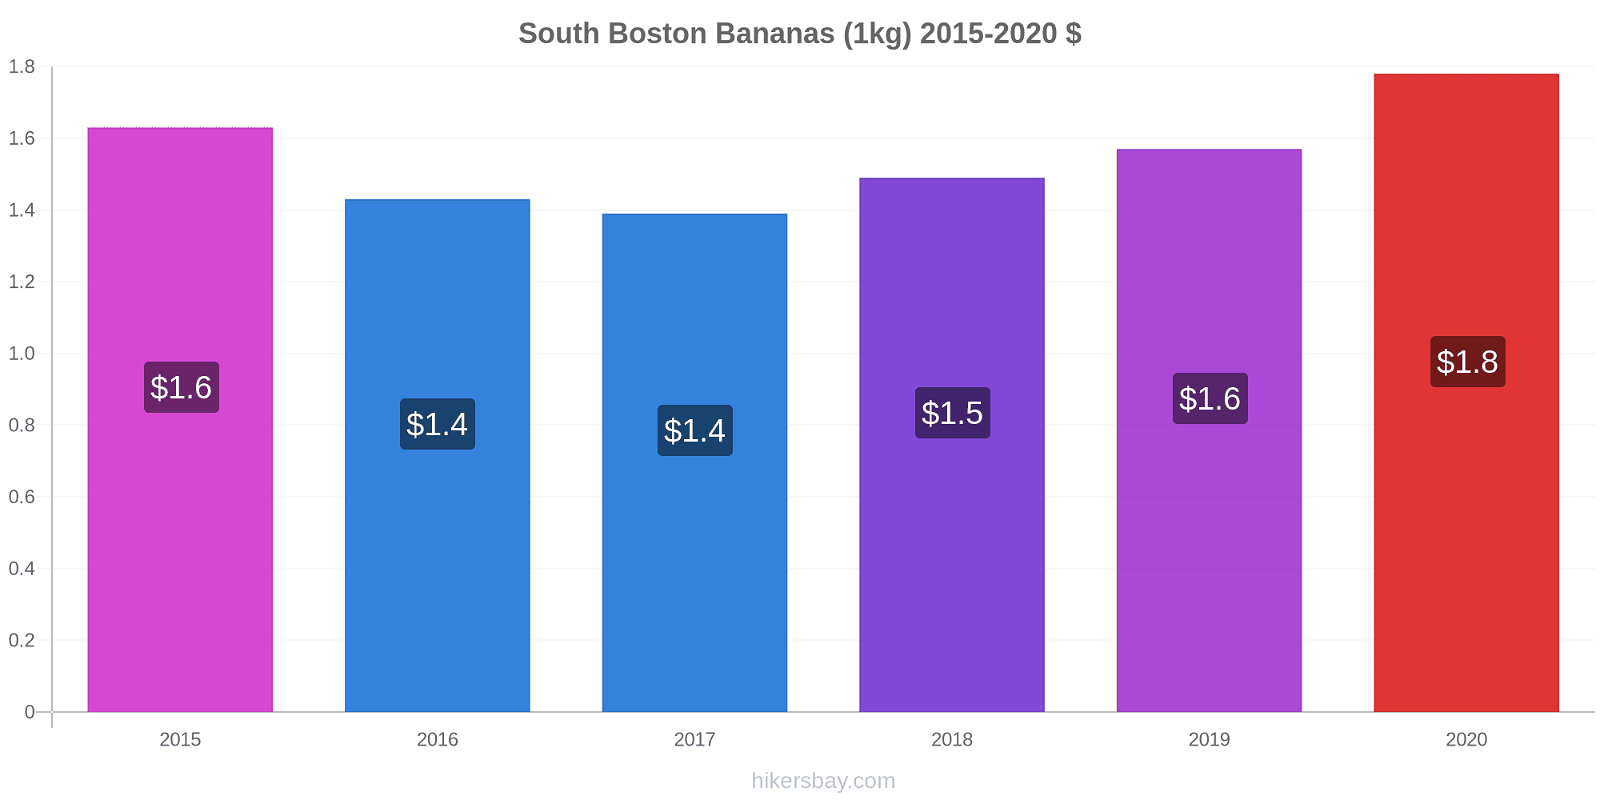 South Boston price changes Bananas (1kg) hikersbay.com